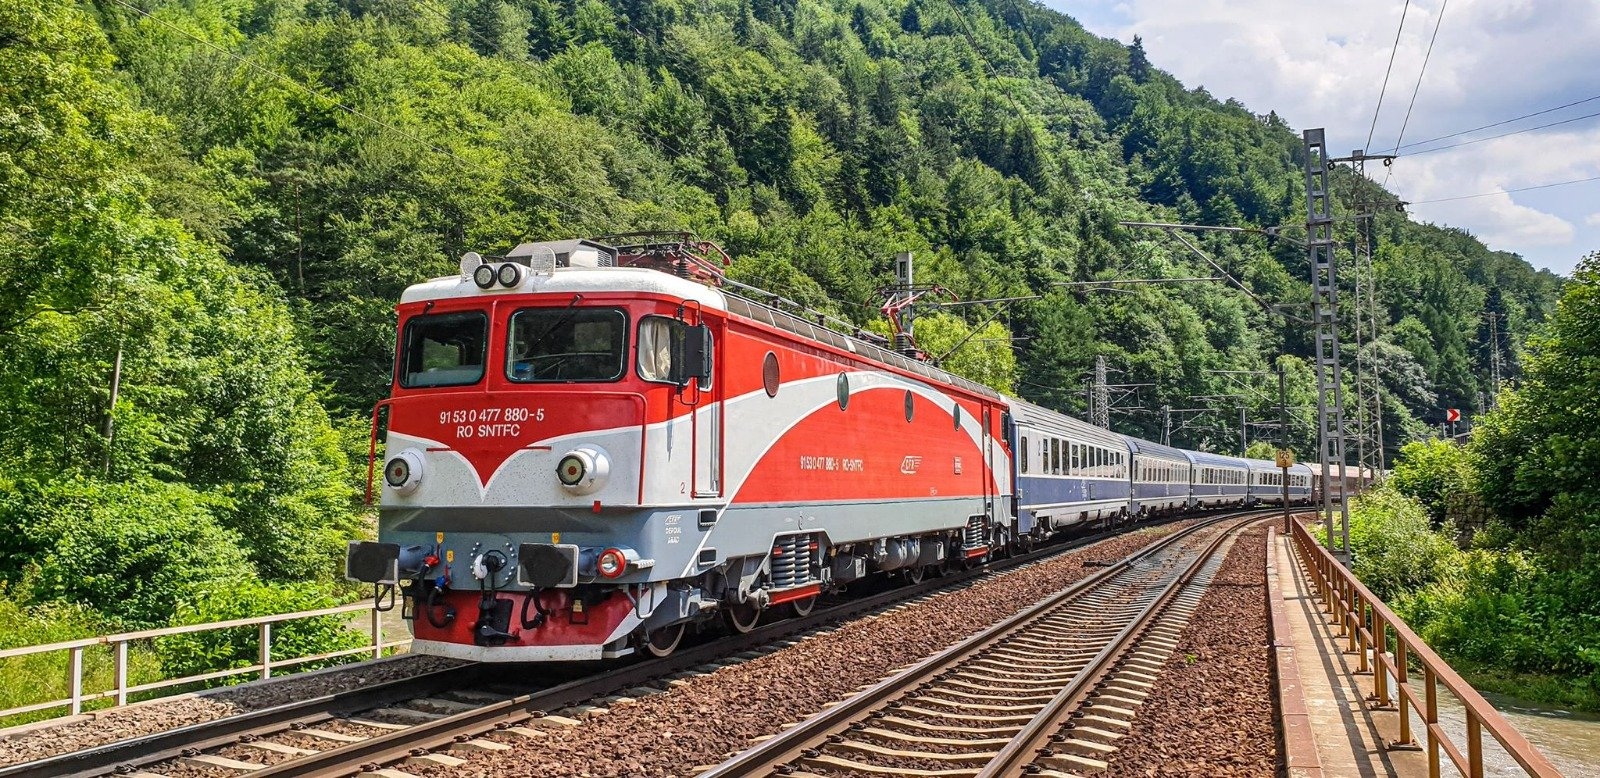 44 km/h a romániai vonatok átlagsebessége